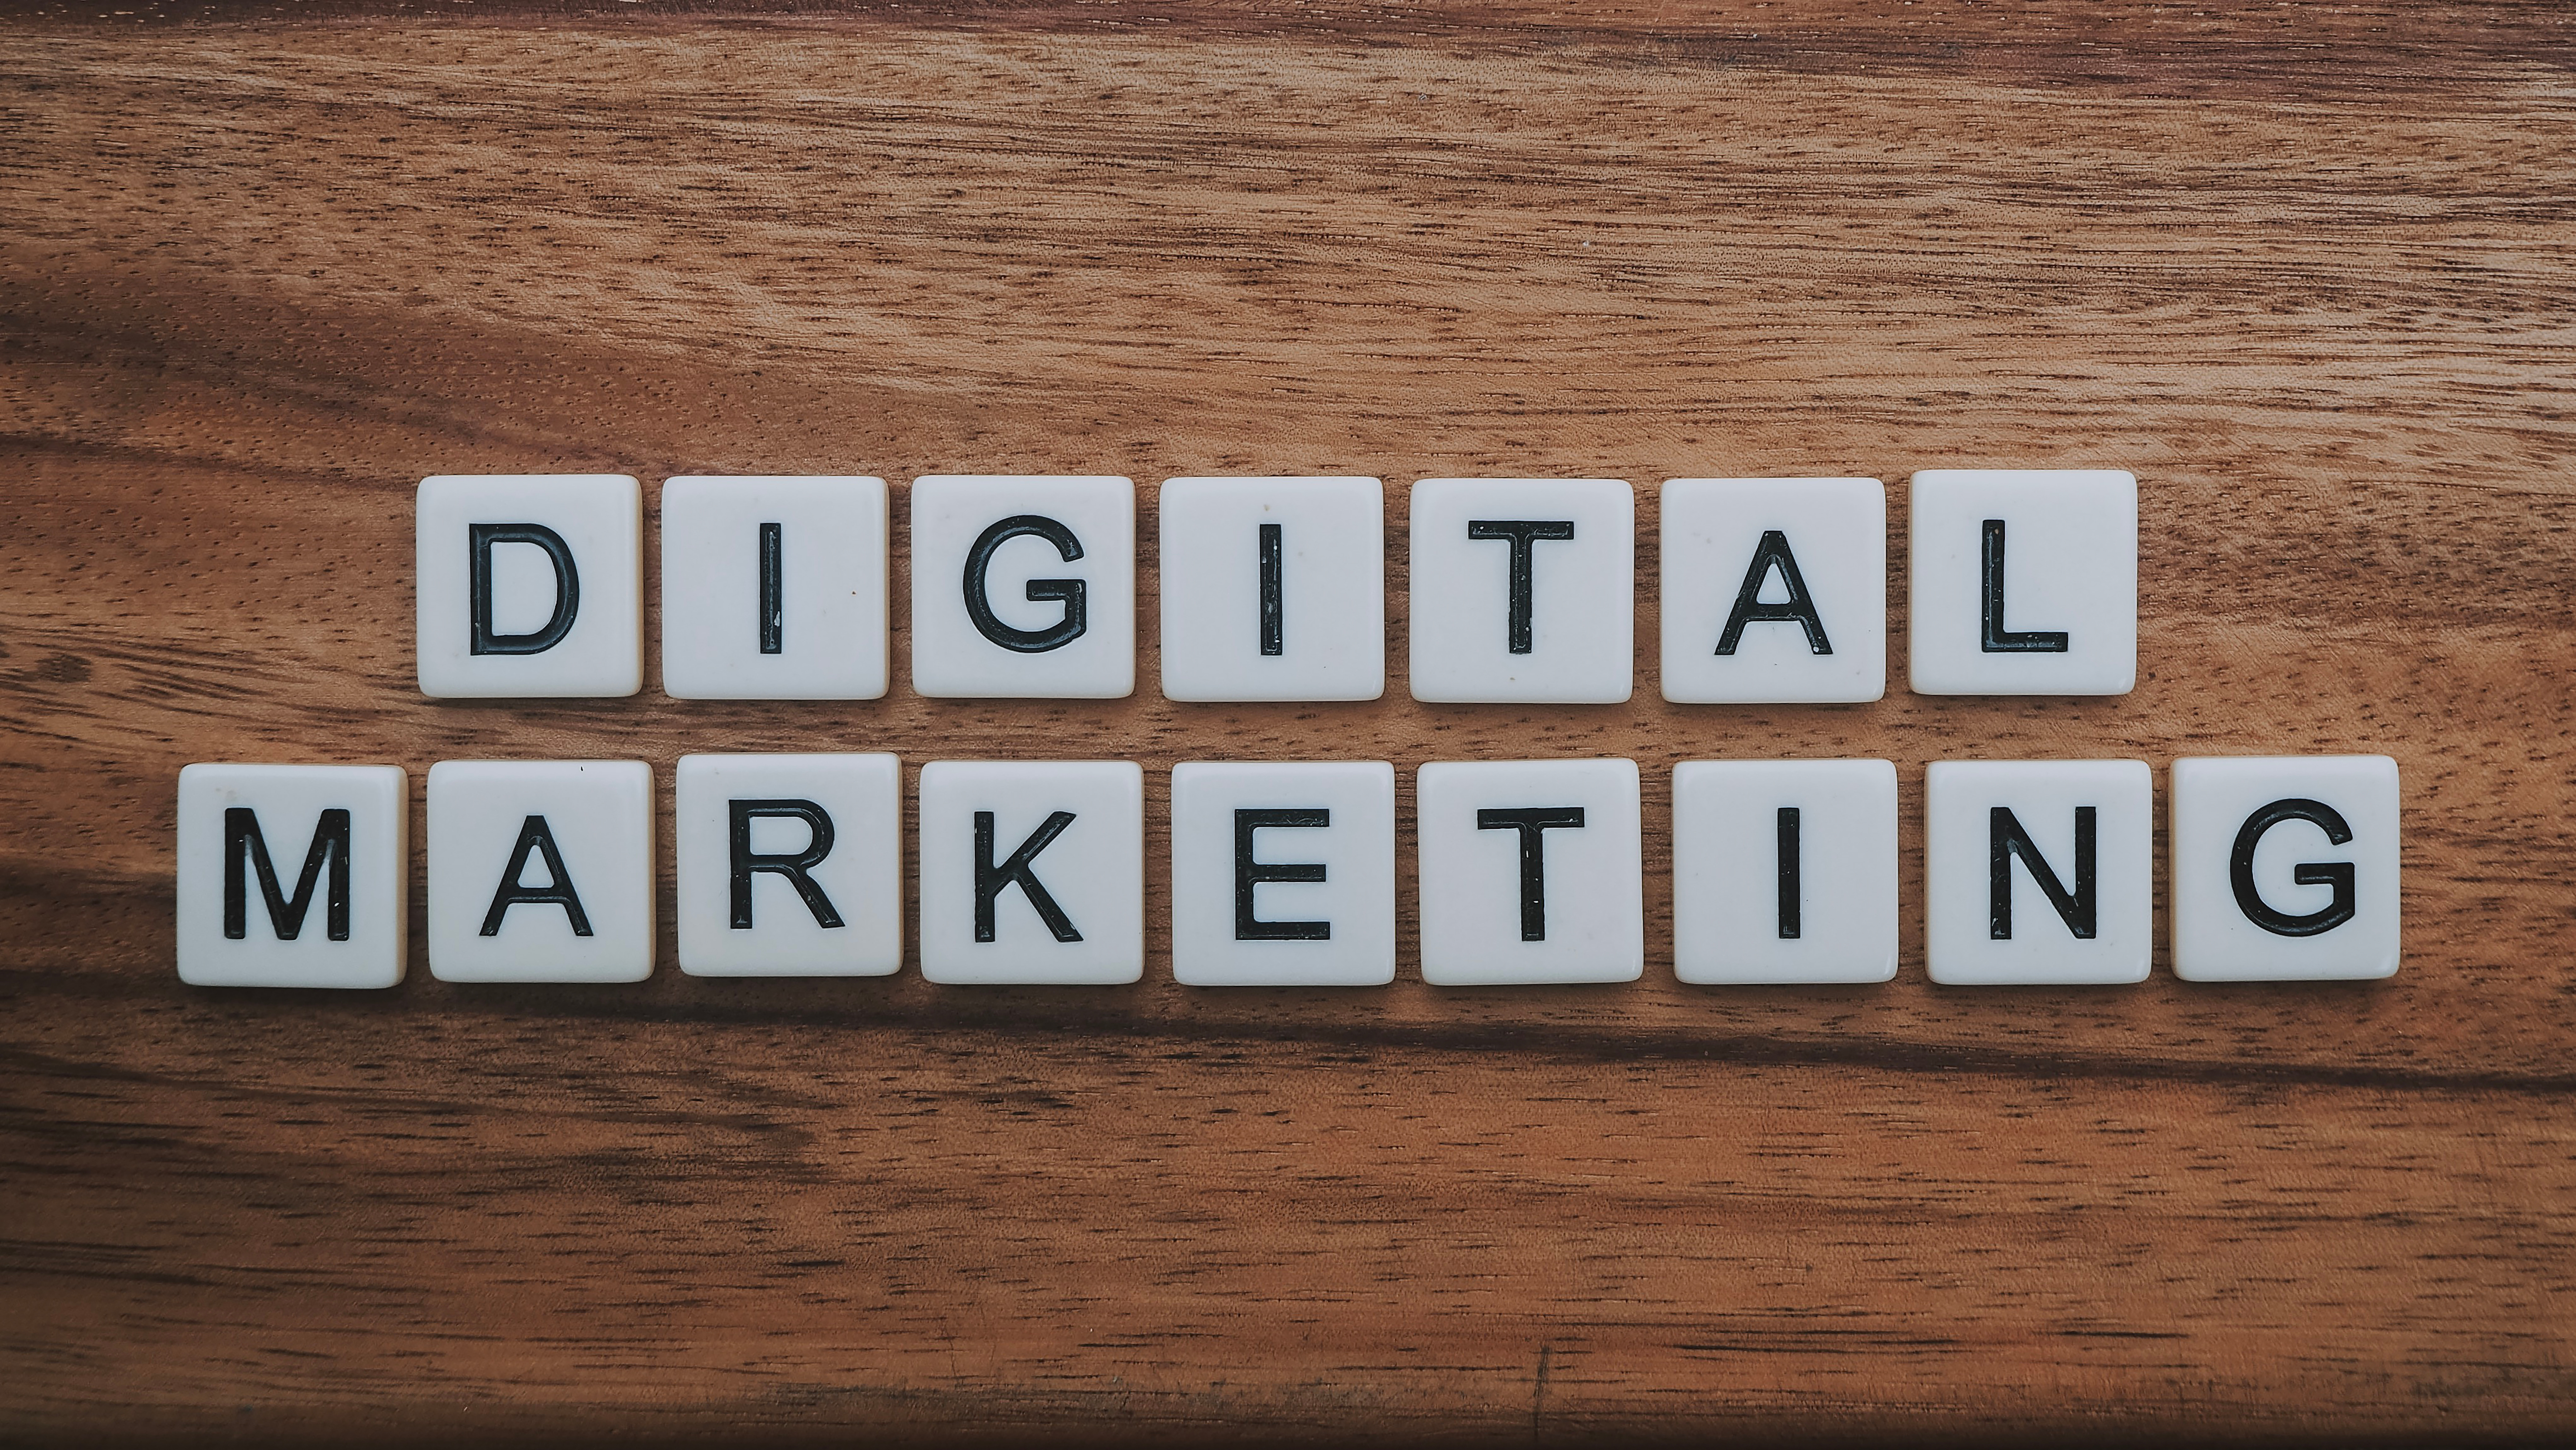 traditional marketing vs. digital marketing - digital marketing